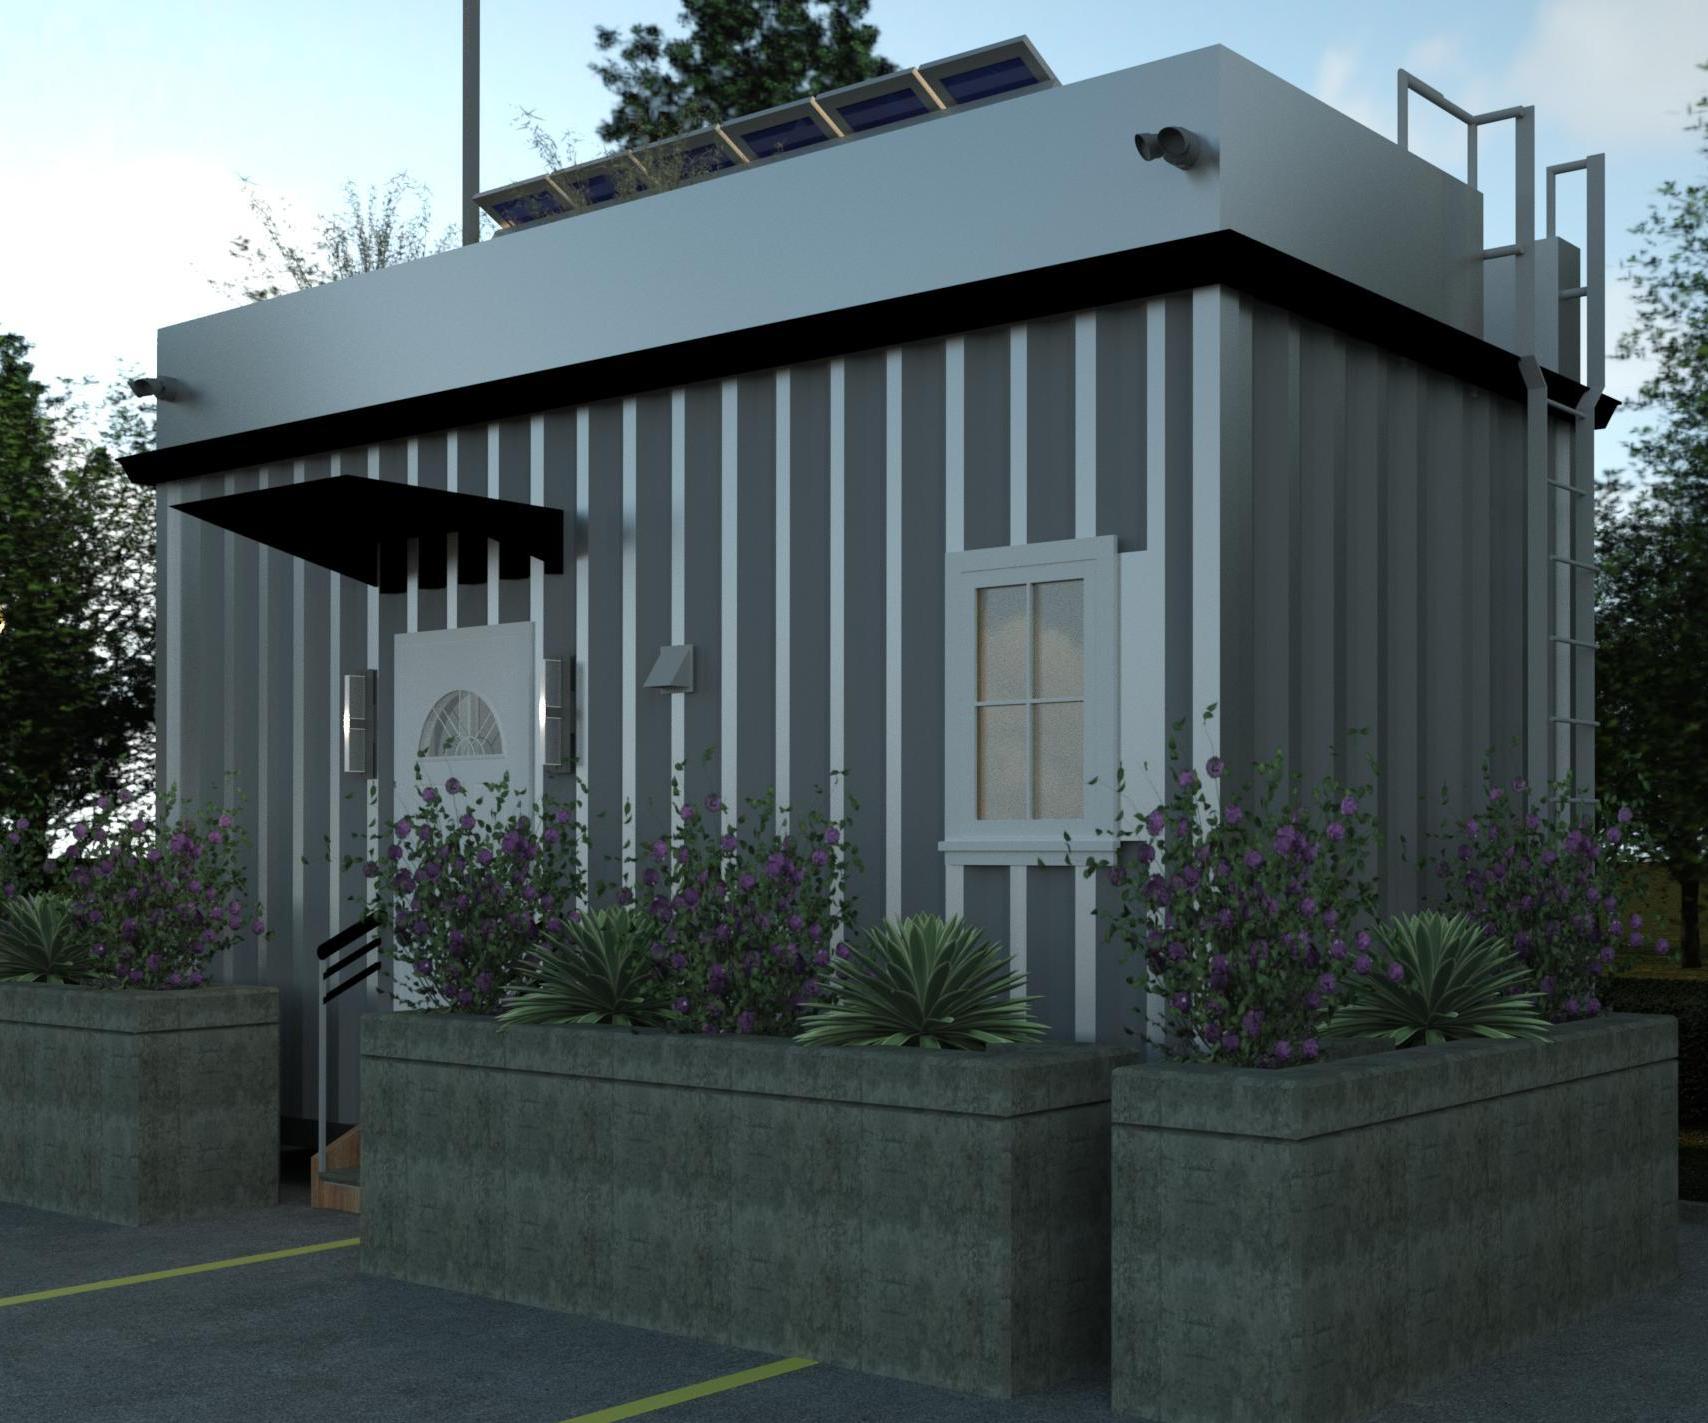 Respite: Modular Inexpensive Container Housing